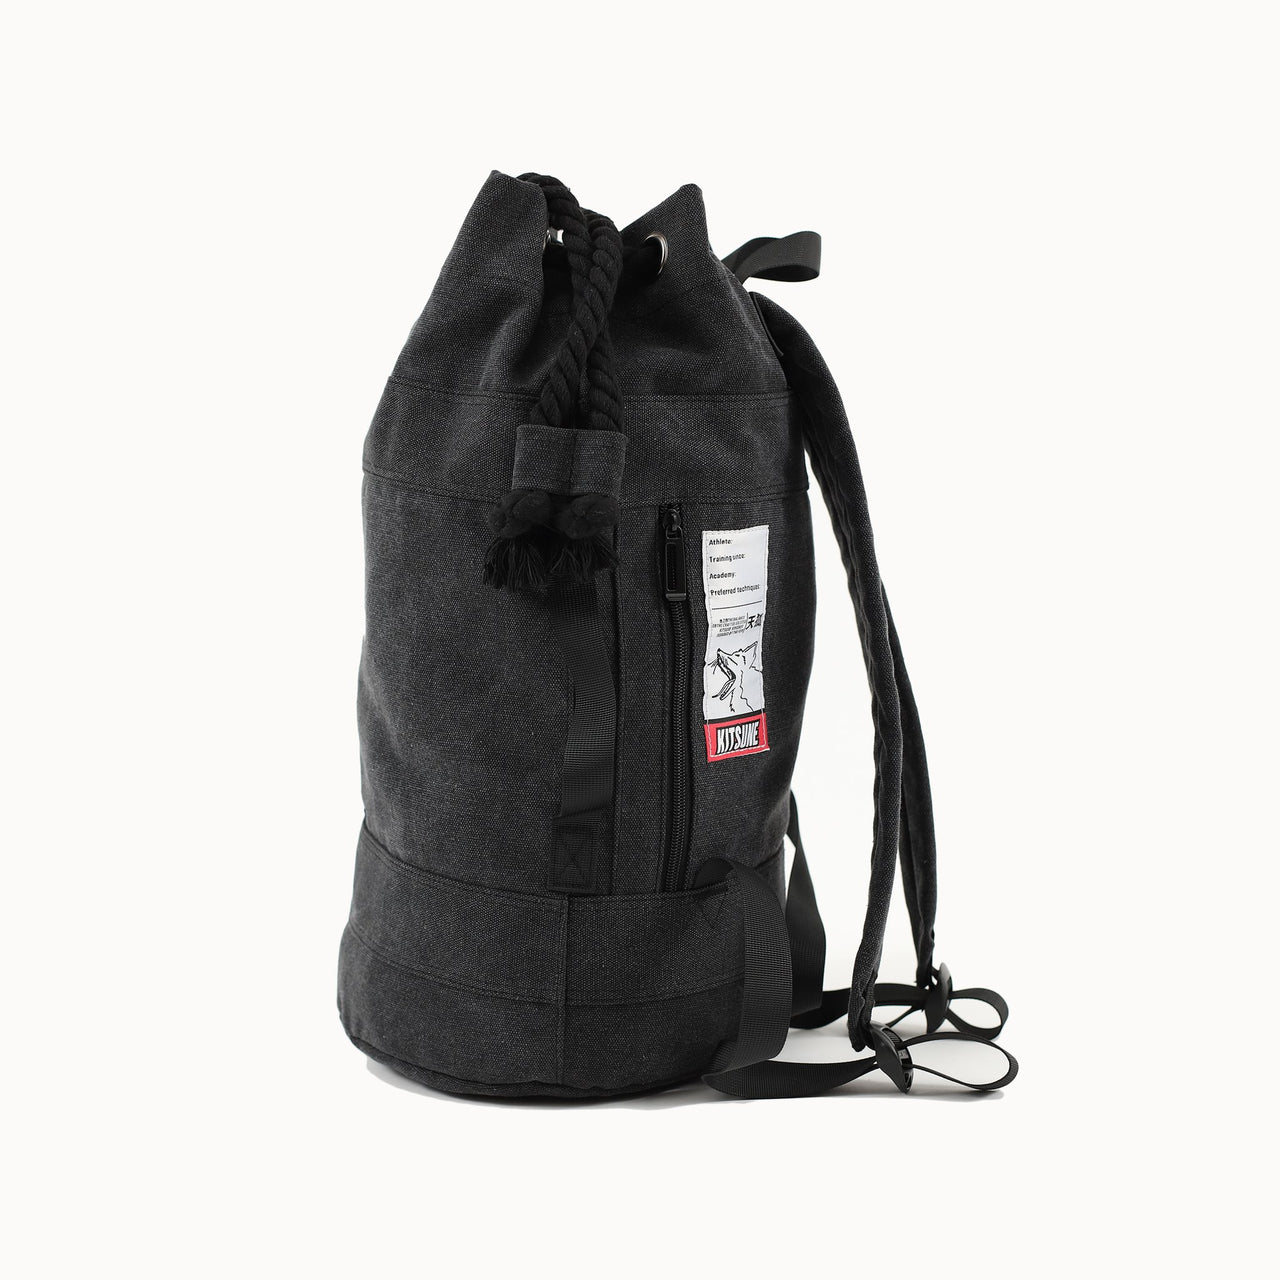 Kitsune "Barrage" Gear Bag - Black